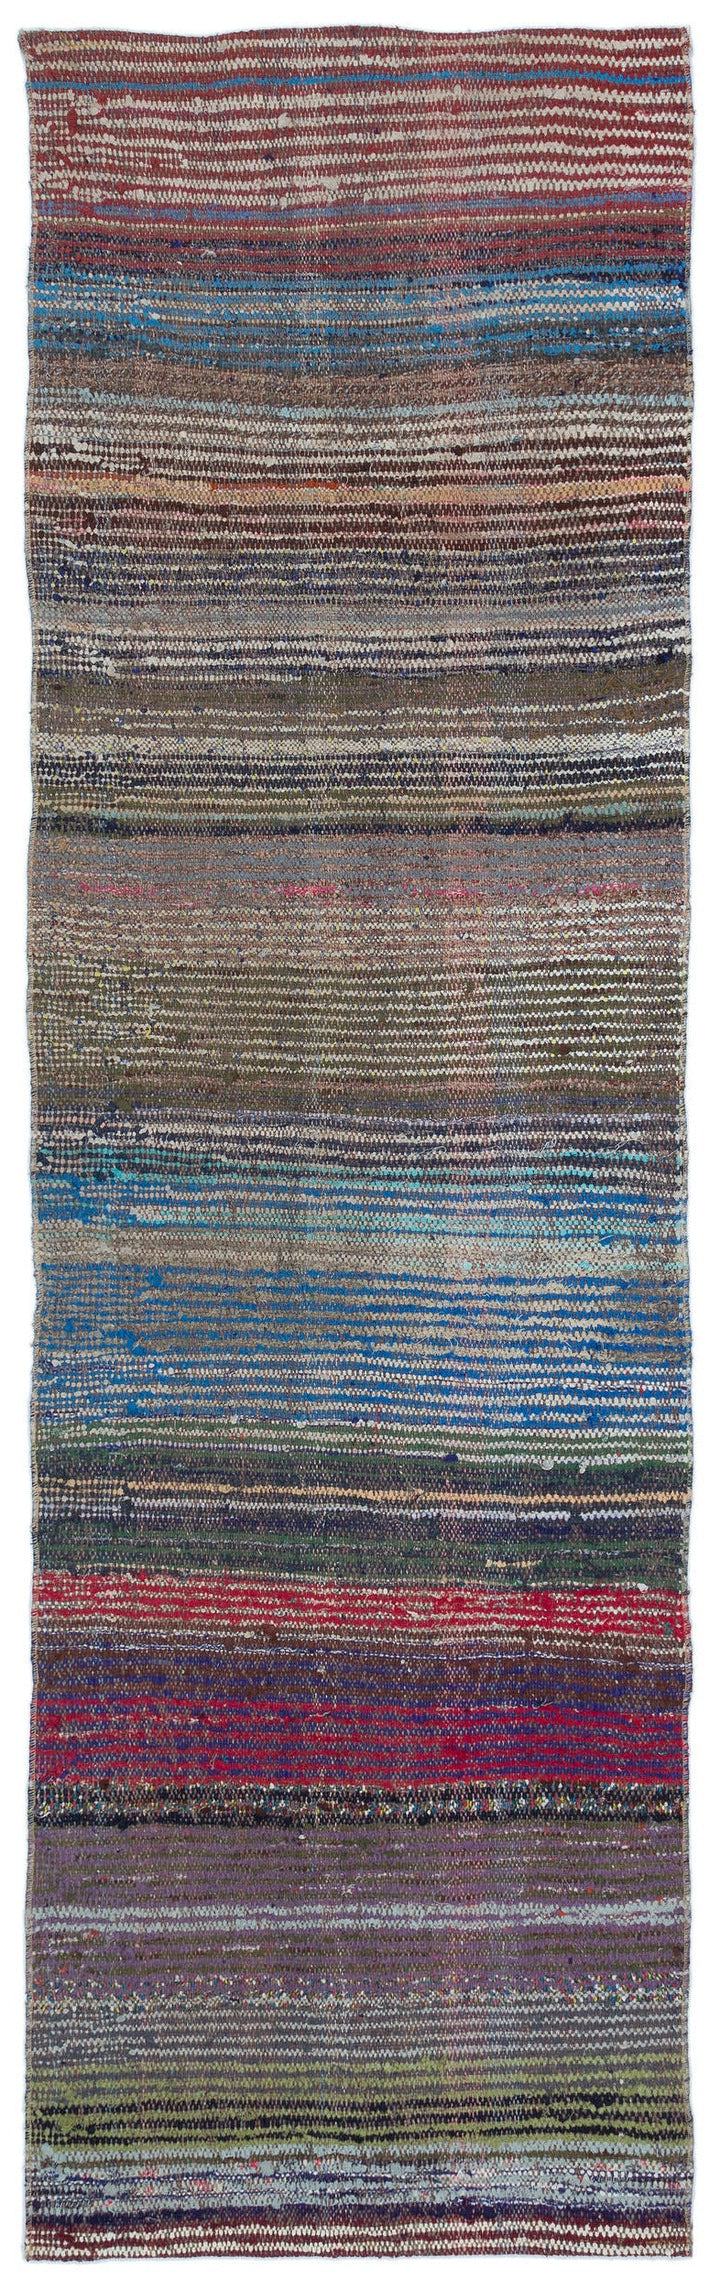 Cretan Gray Striped Wool Hand-Woven Carpet 070 x 237